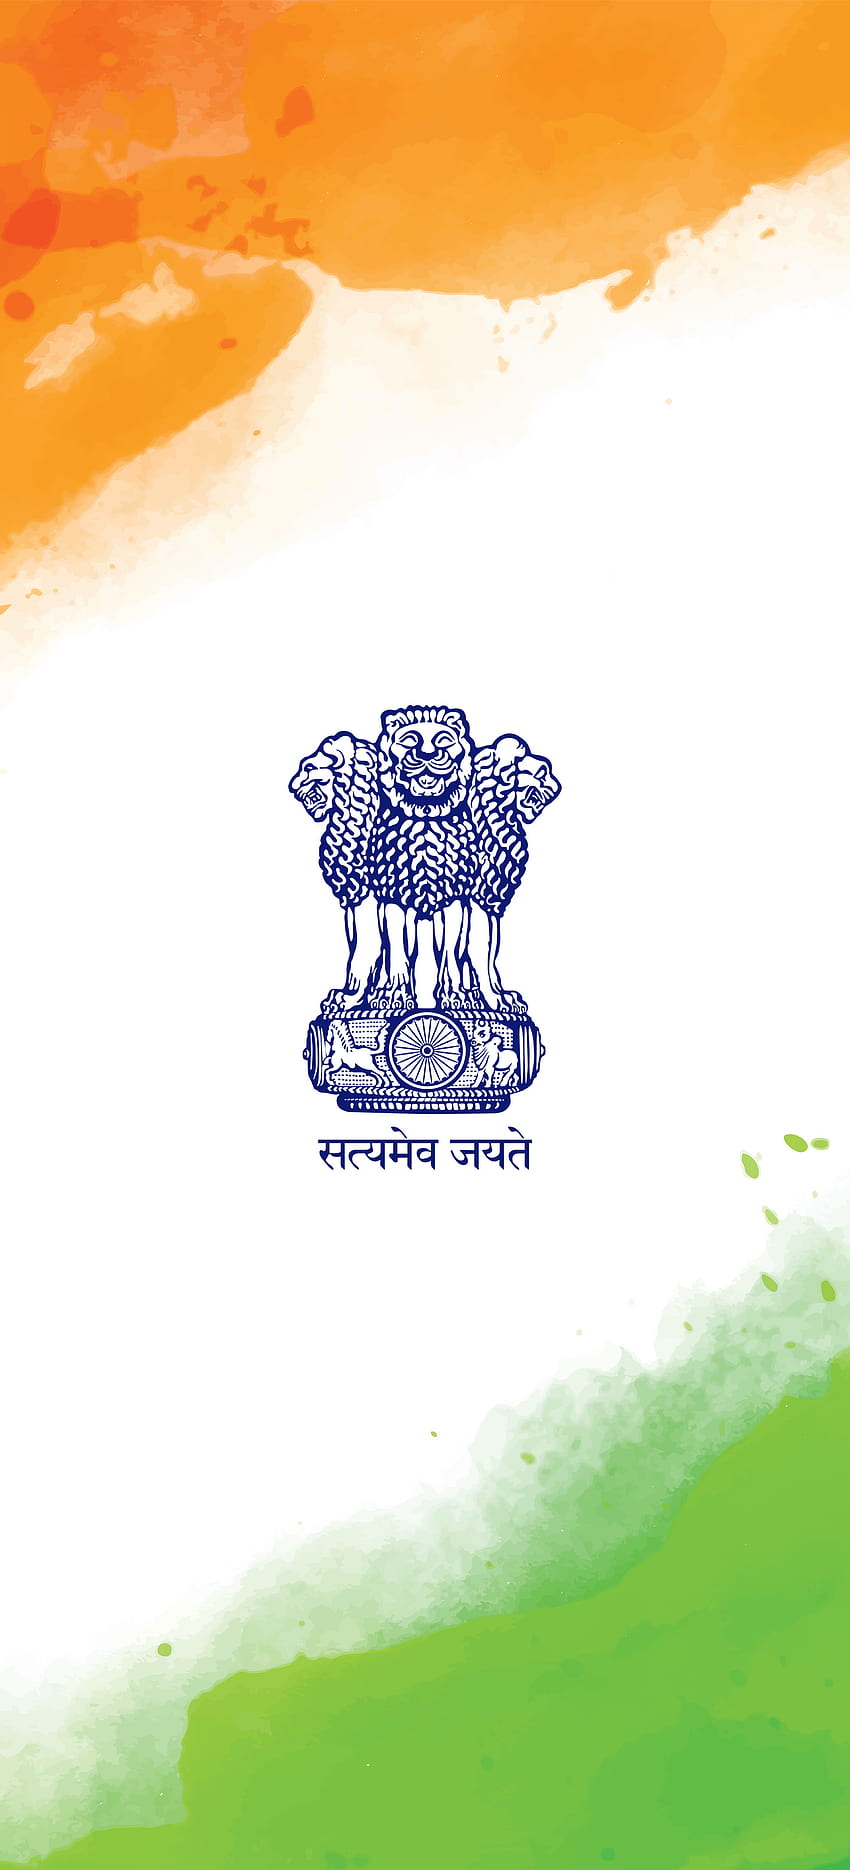 Líder mundial India, indio, independencia, indianflag, bandera, emblema fondo de pantalla del teléfono